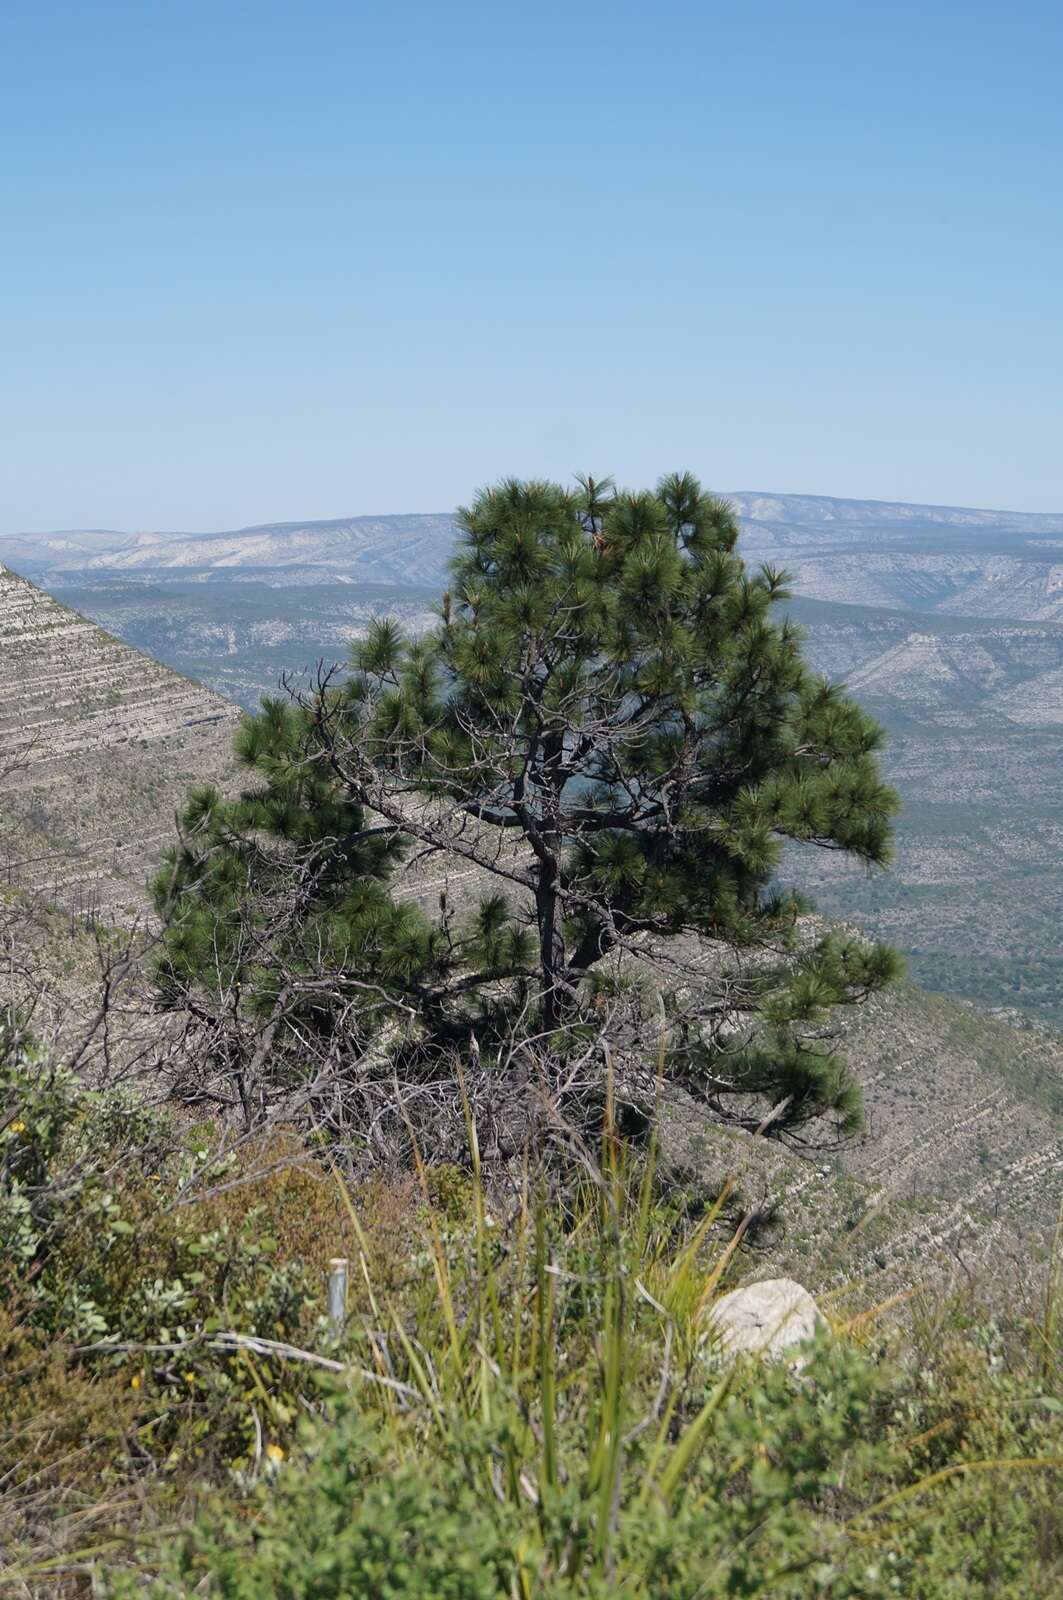 Image of Arizona pine